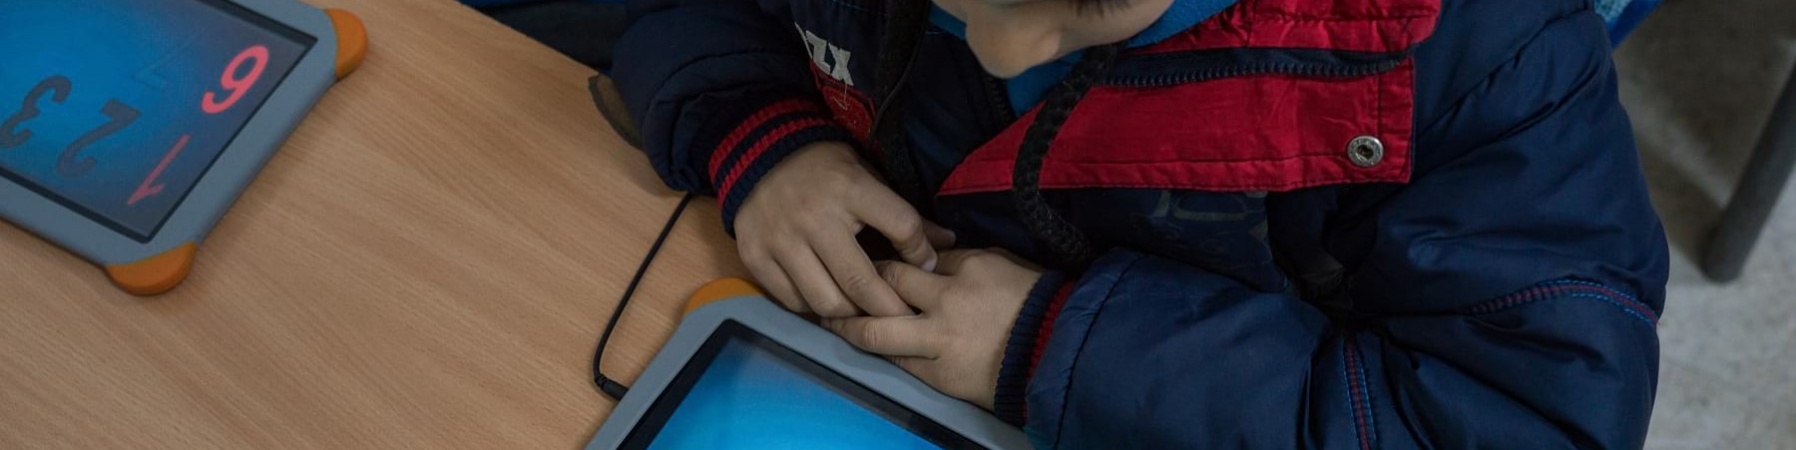 bambino seduto al banco studia con un tablet davanti